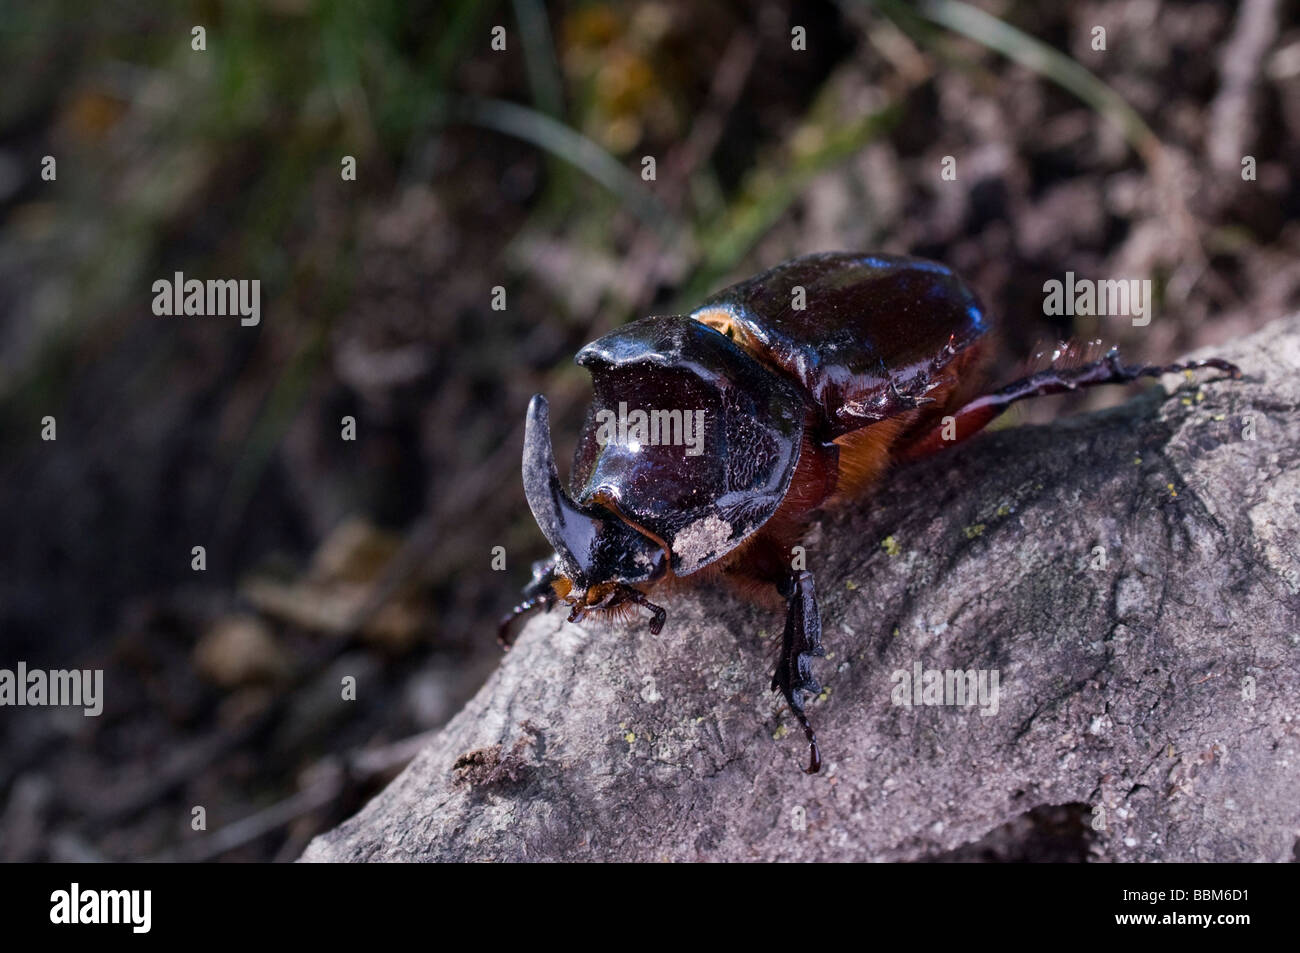 Rhinocerus Beetle (Oryctes nasicoris), Marmore Waterfalls, Umbria, Italy, Europe Stock Photo